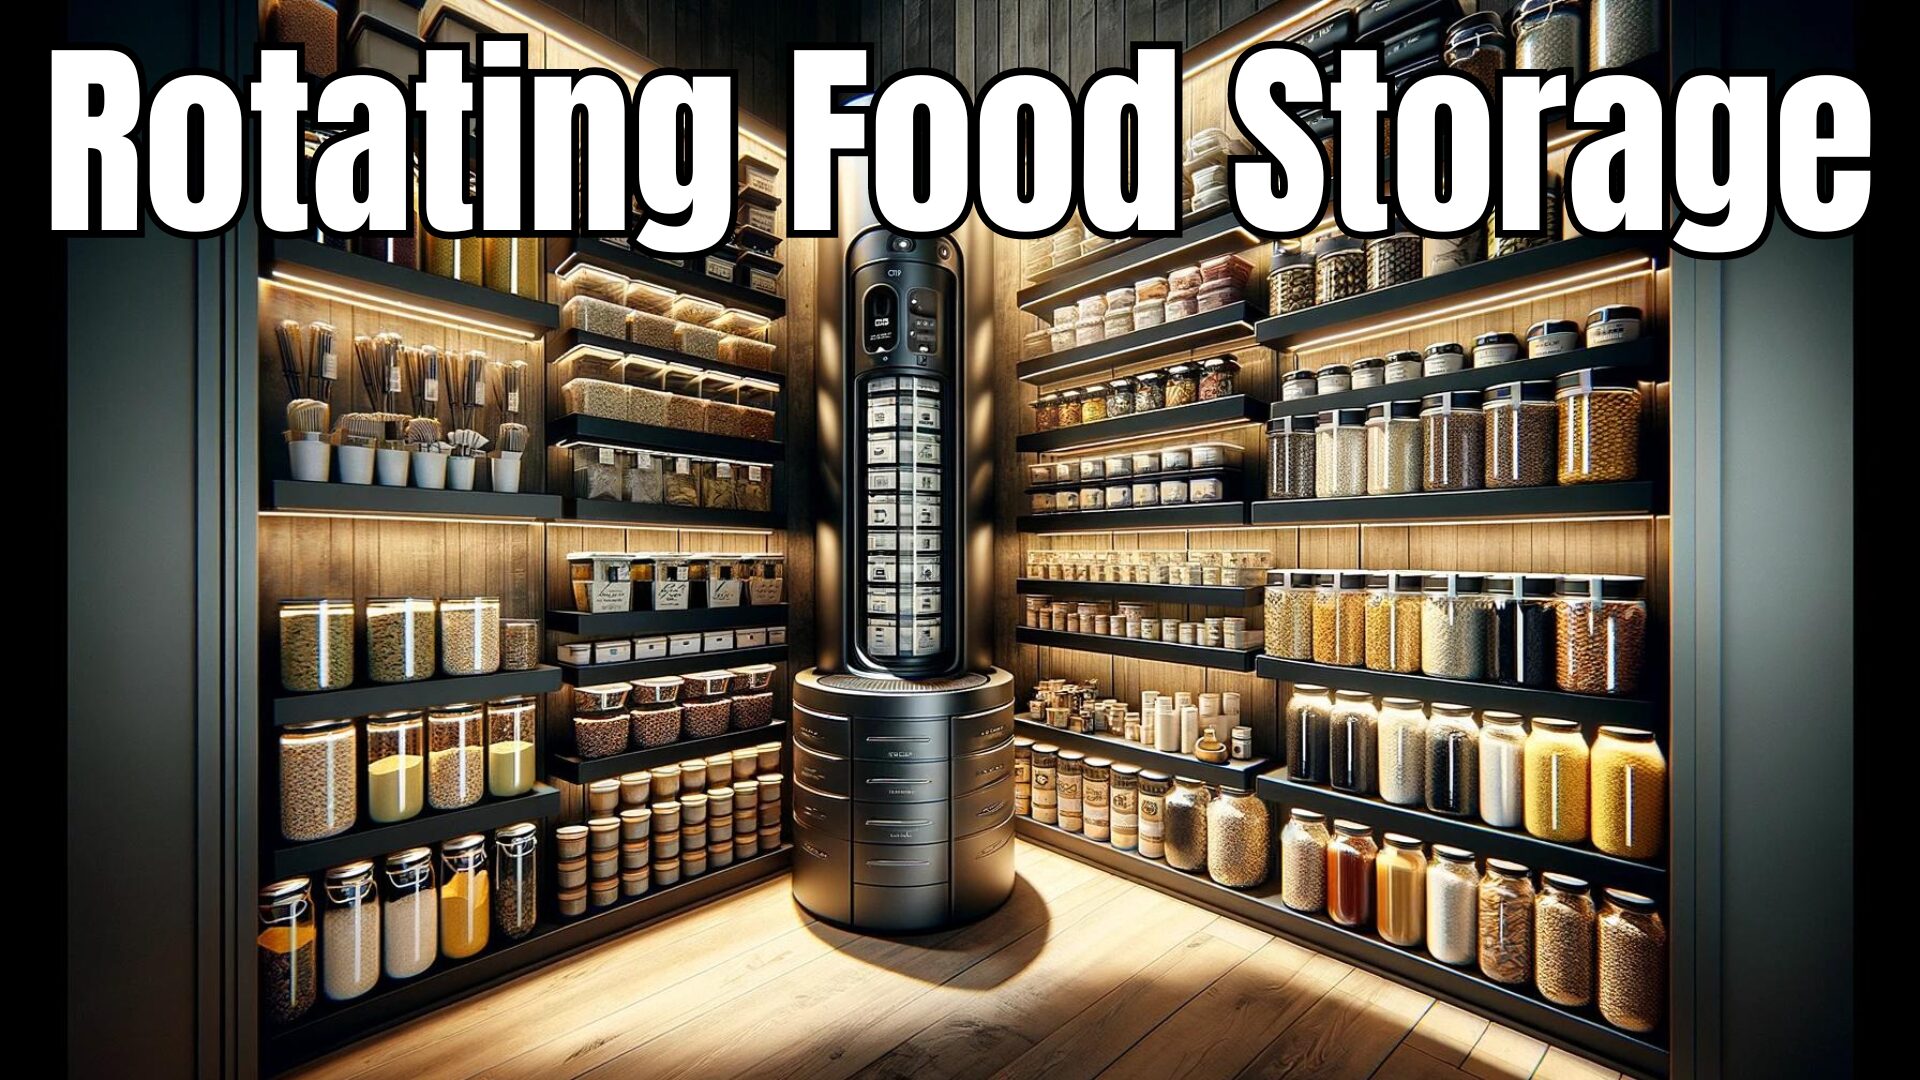 Rotating Food Storage